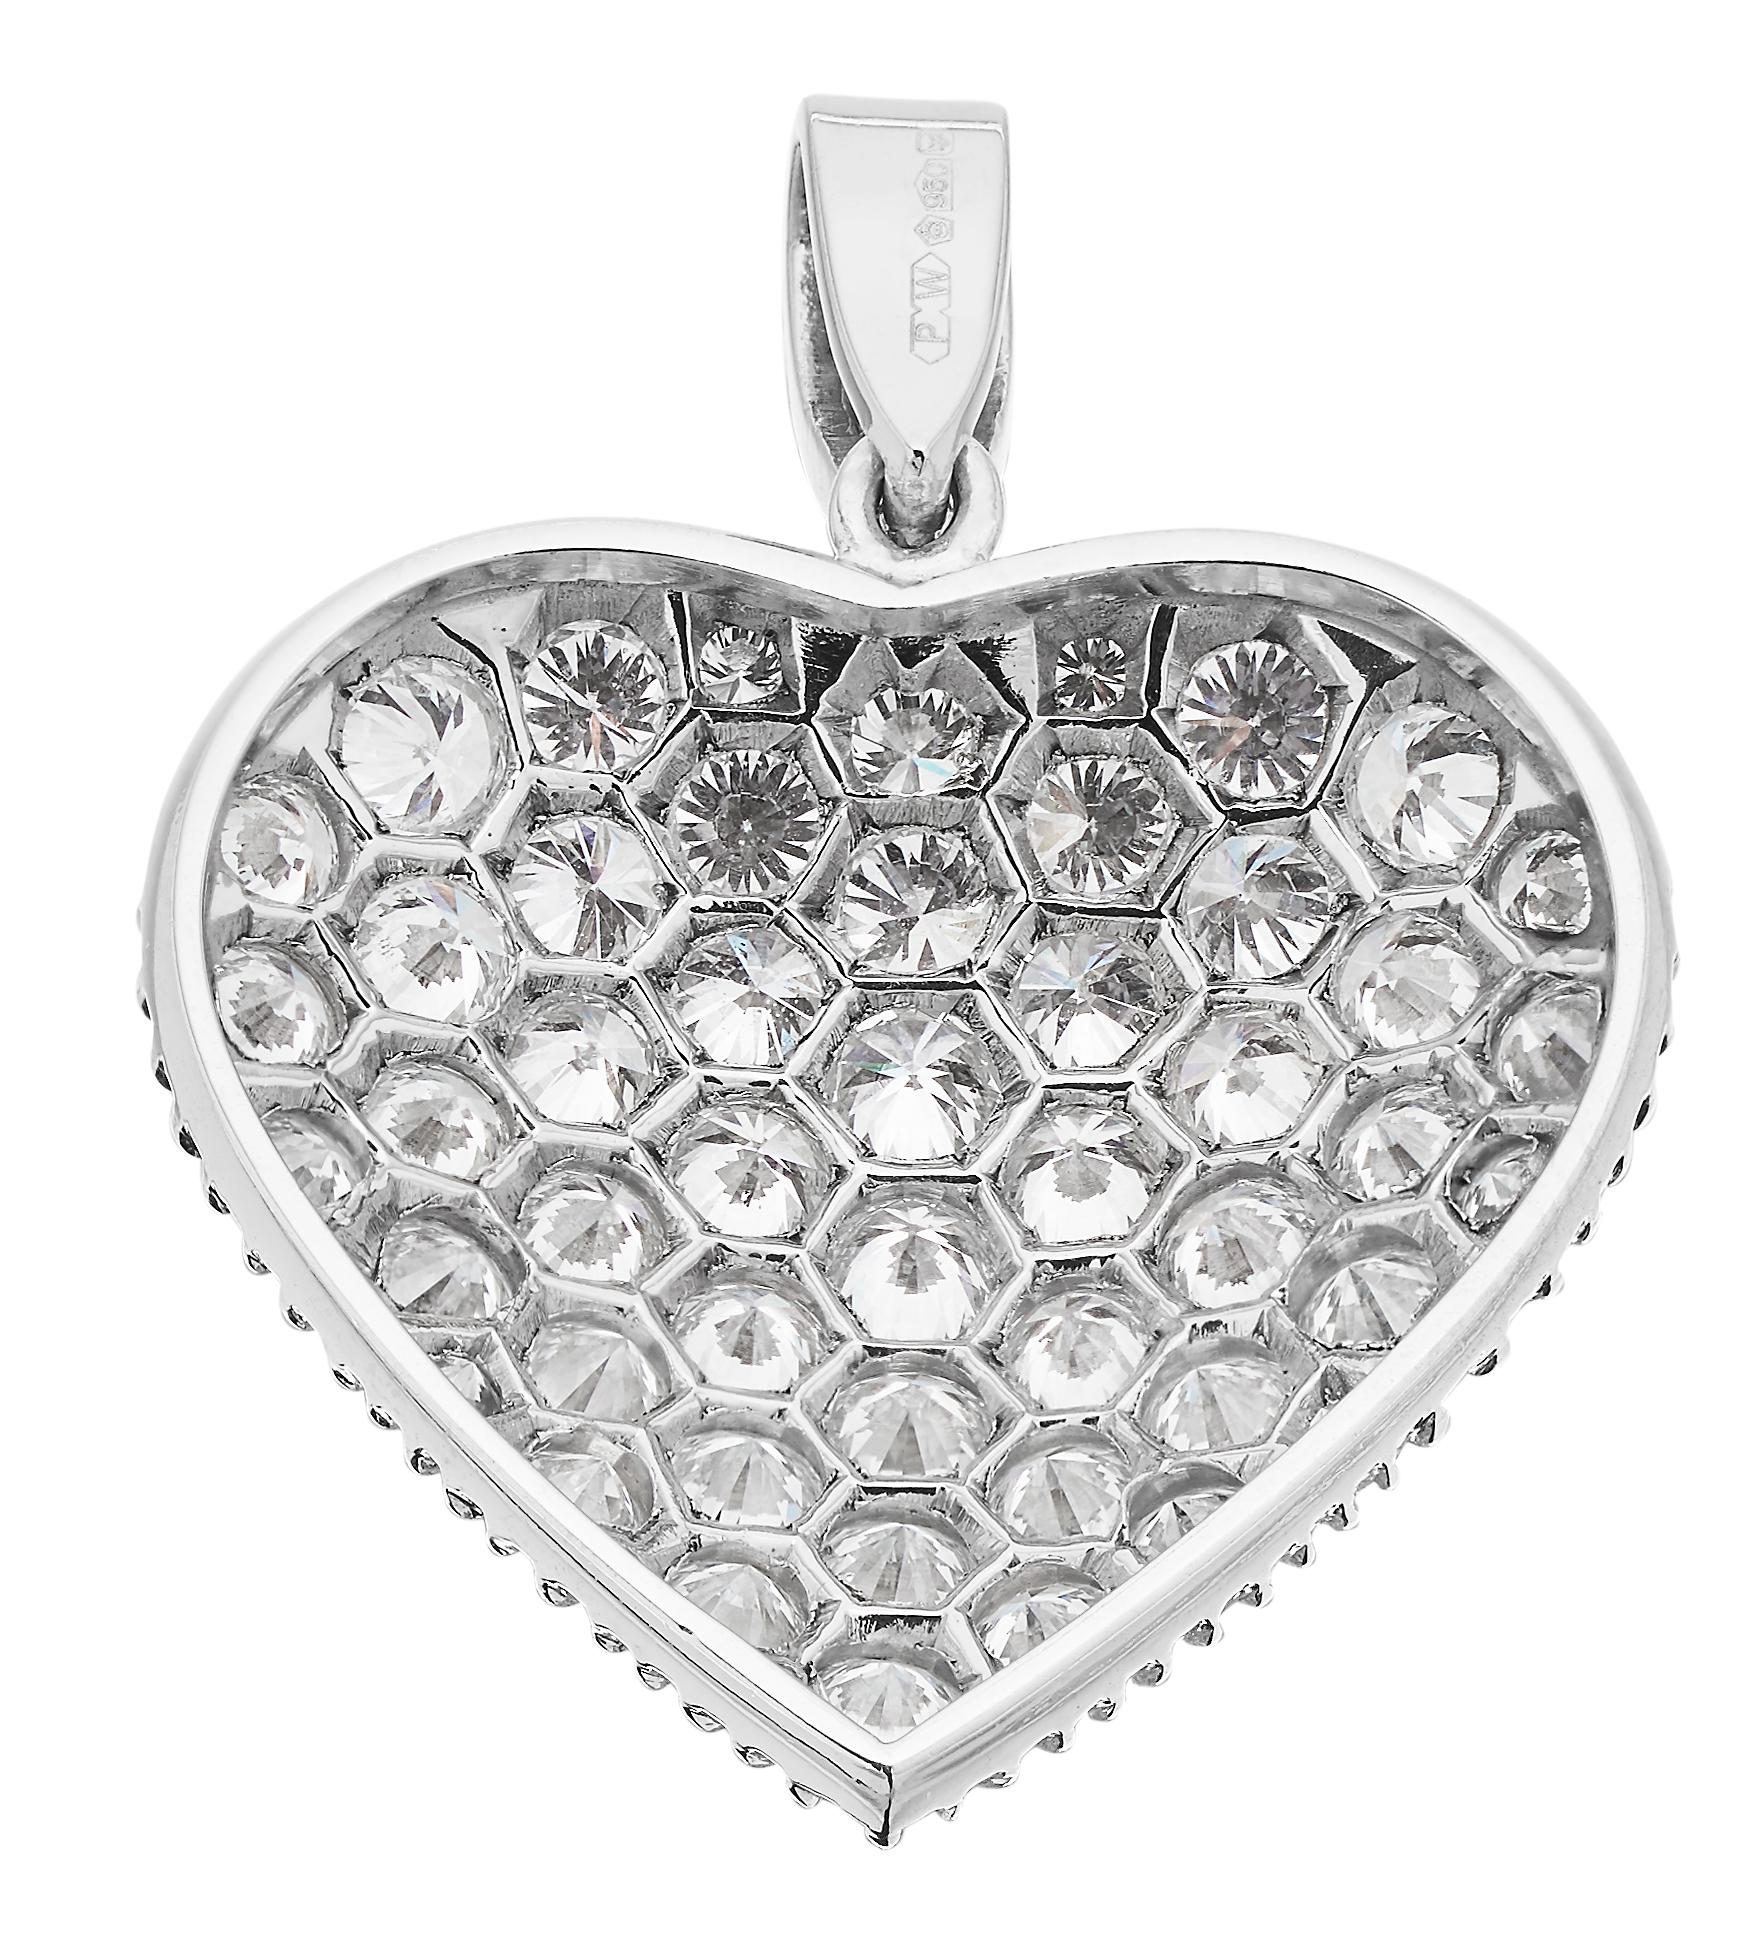 Beautiful diamond heart pendant set with glistening round brilliant diamonds on a platinum with textured edge. 
British hallmarked platinum 950, London, sponsor mark 